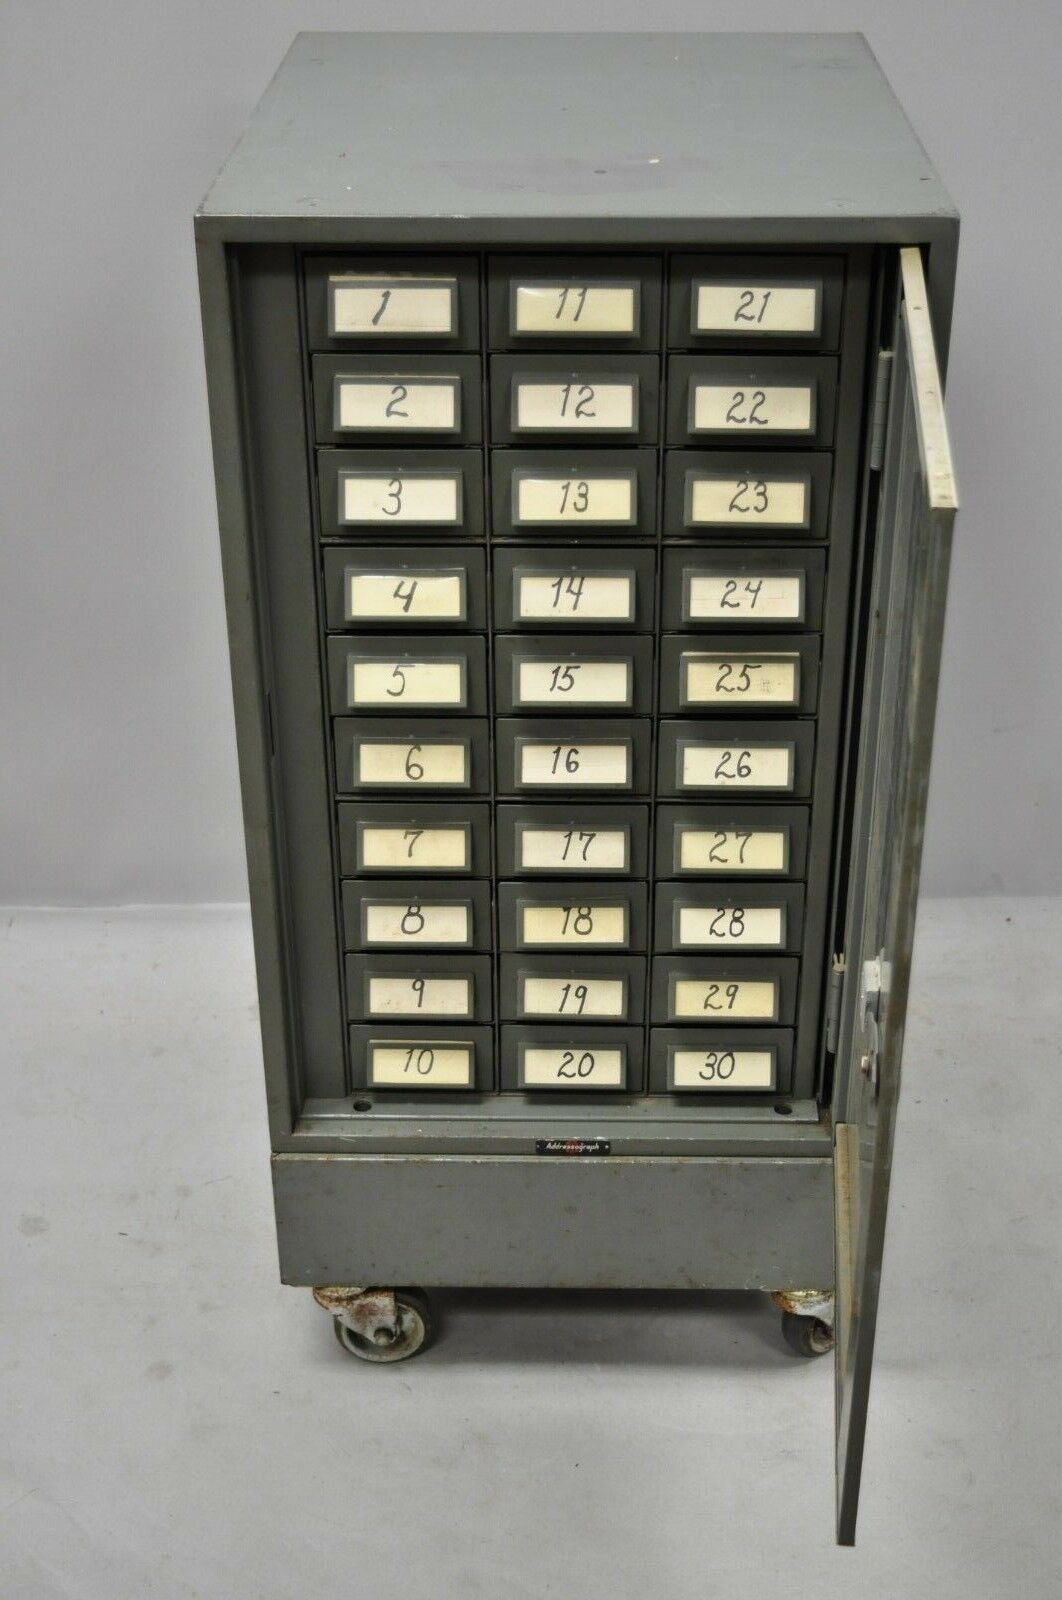 Vintage Industrial Steel Metal 30 Drawer Cataloge File Cabinet by Addressograph